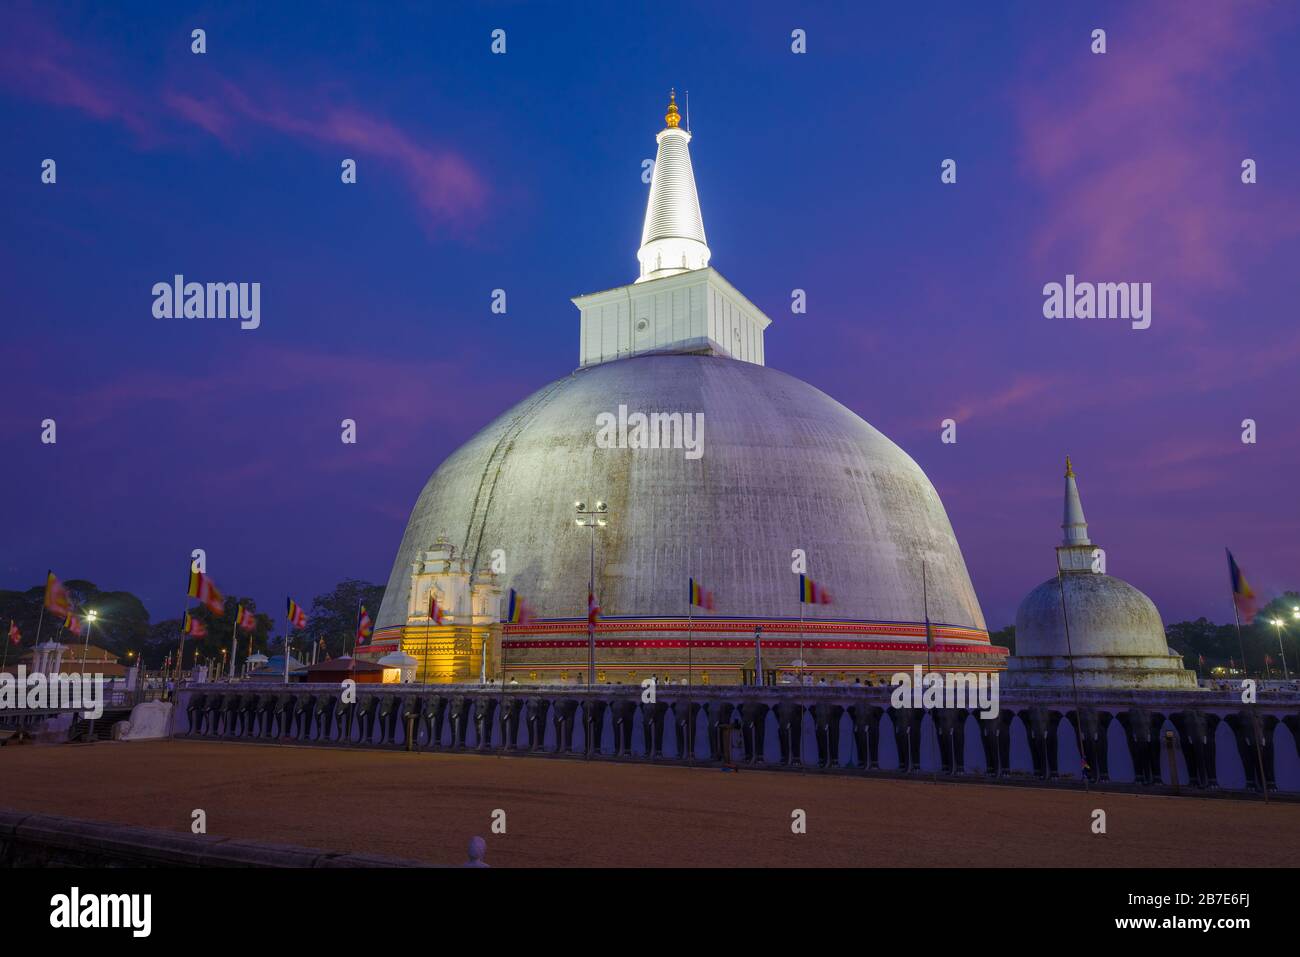 The ancient Ruwanweli Maha Seya Dagoba on evening twilight. Anuradhapura, Sri Lanka Stock Photo